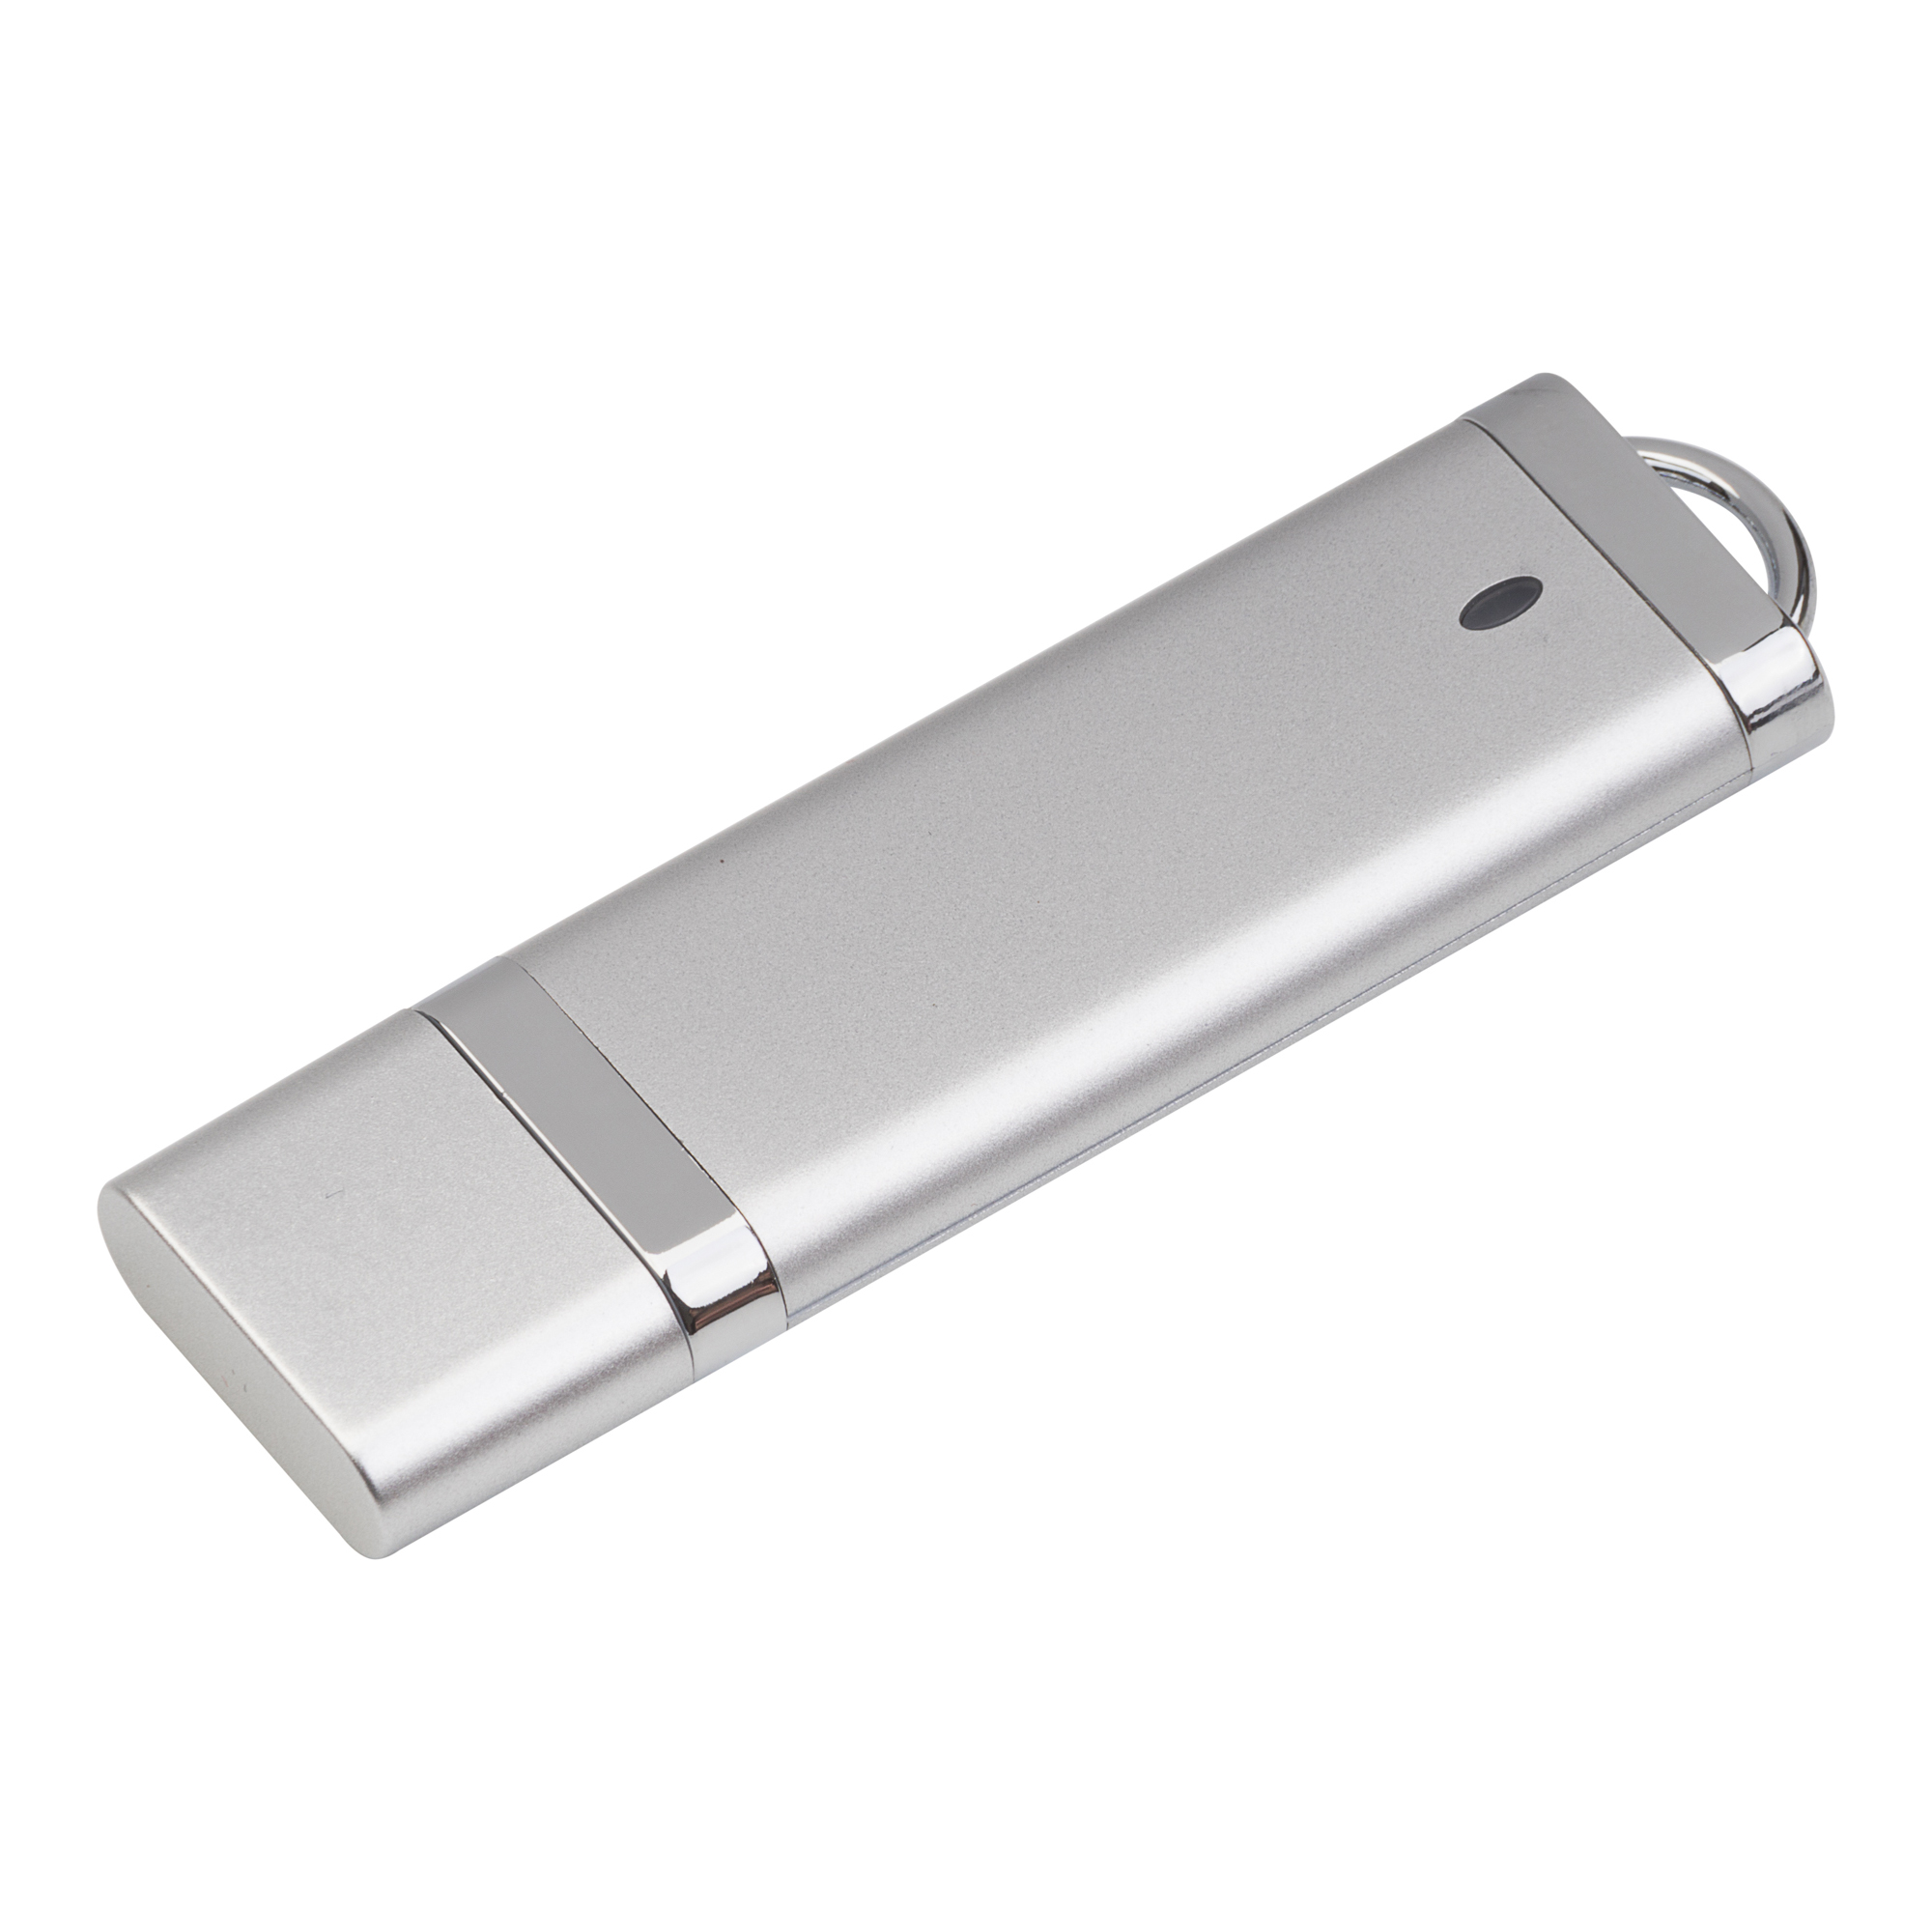 USB-флешка модель 116 Soft Touch USB 3.0, объем памяти 512 MB, цвет S